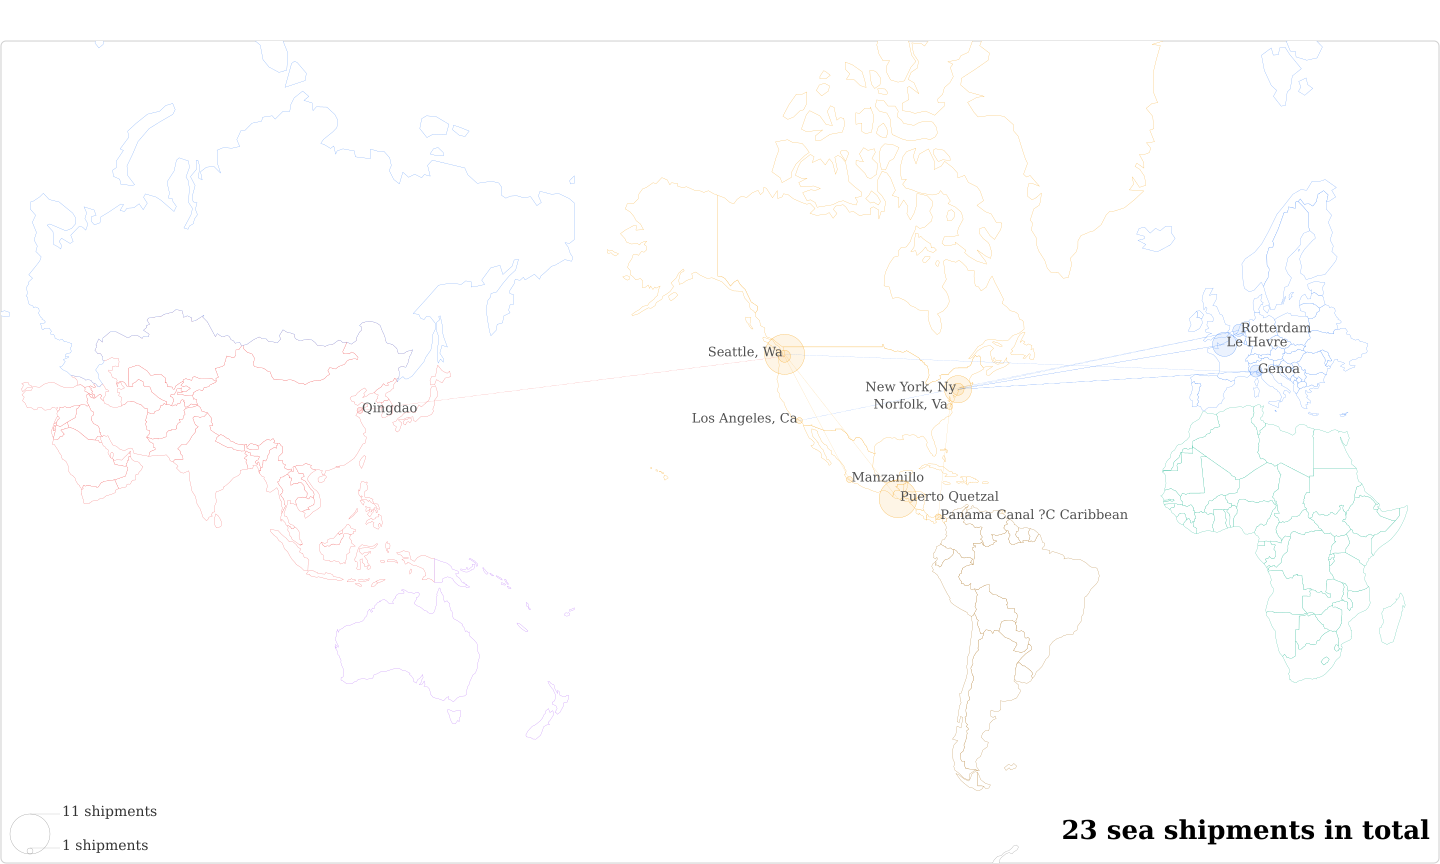 Caffe Vita's Imports Per Country Map